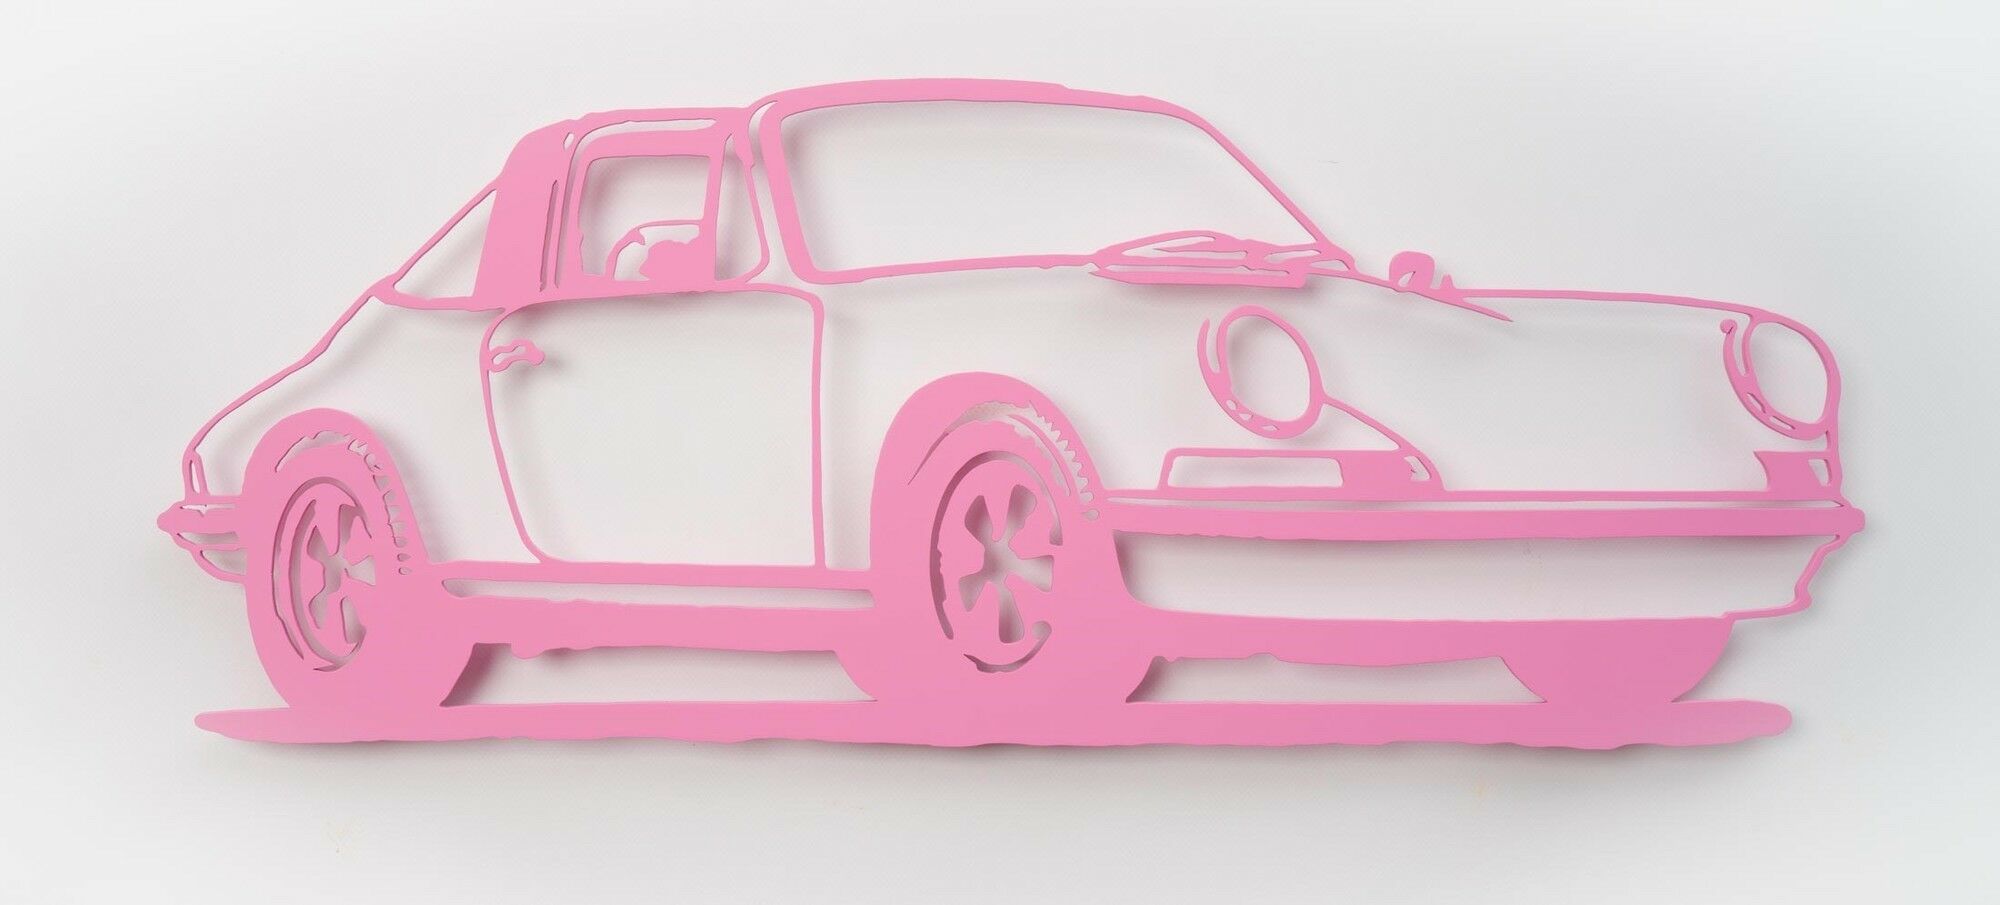 Wandobject "Porsche 911 Targa (roze)" (2021) (Uniek stuk) von Jan M. Petersen